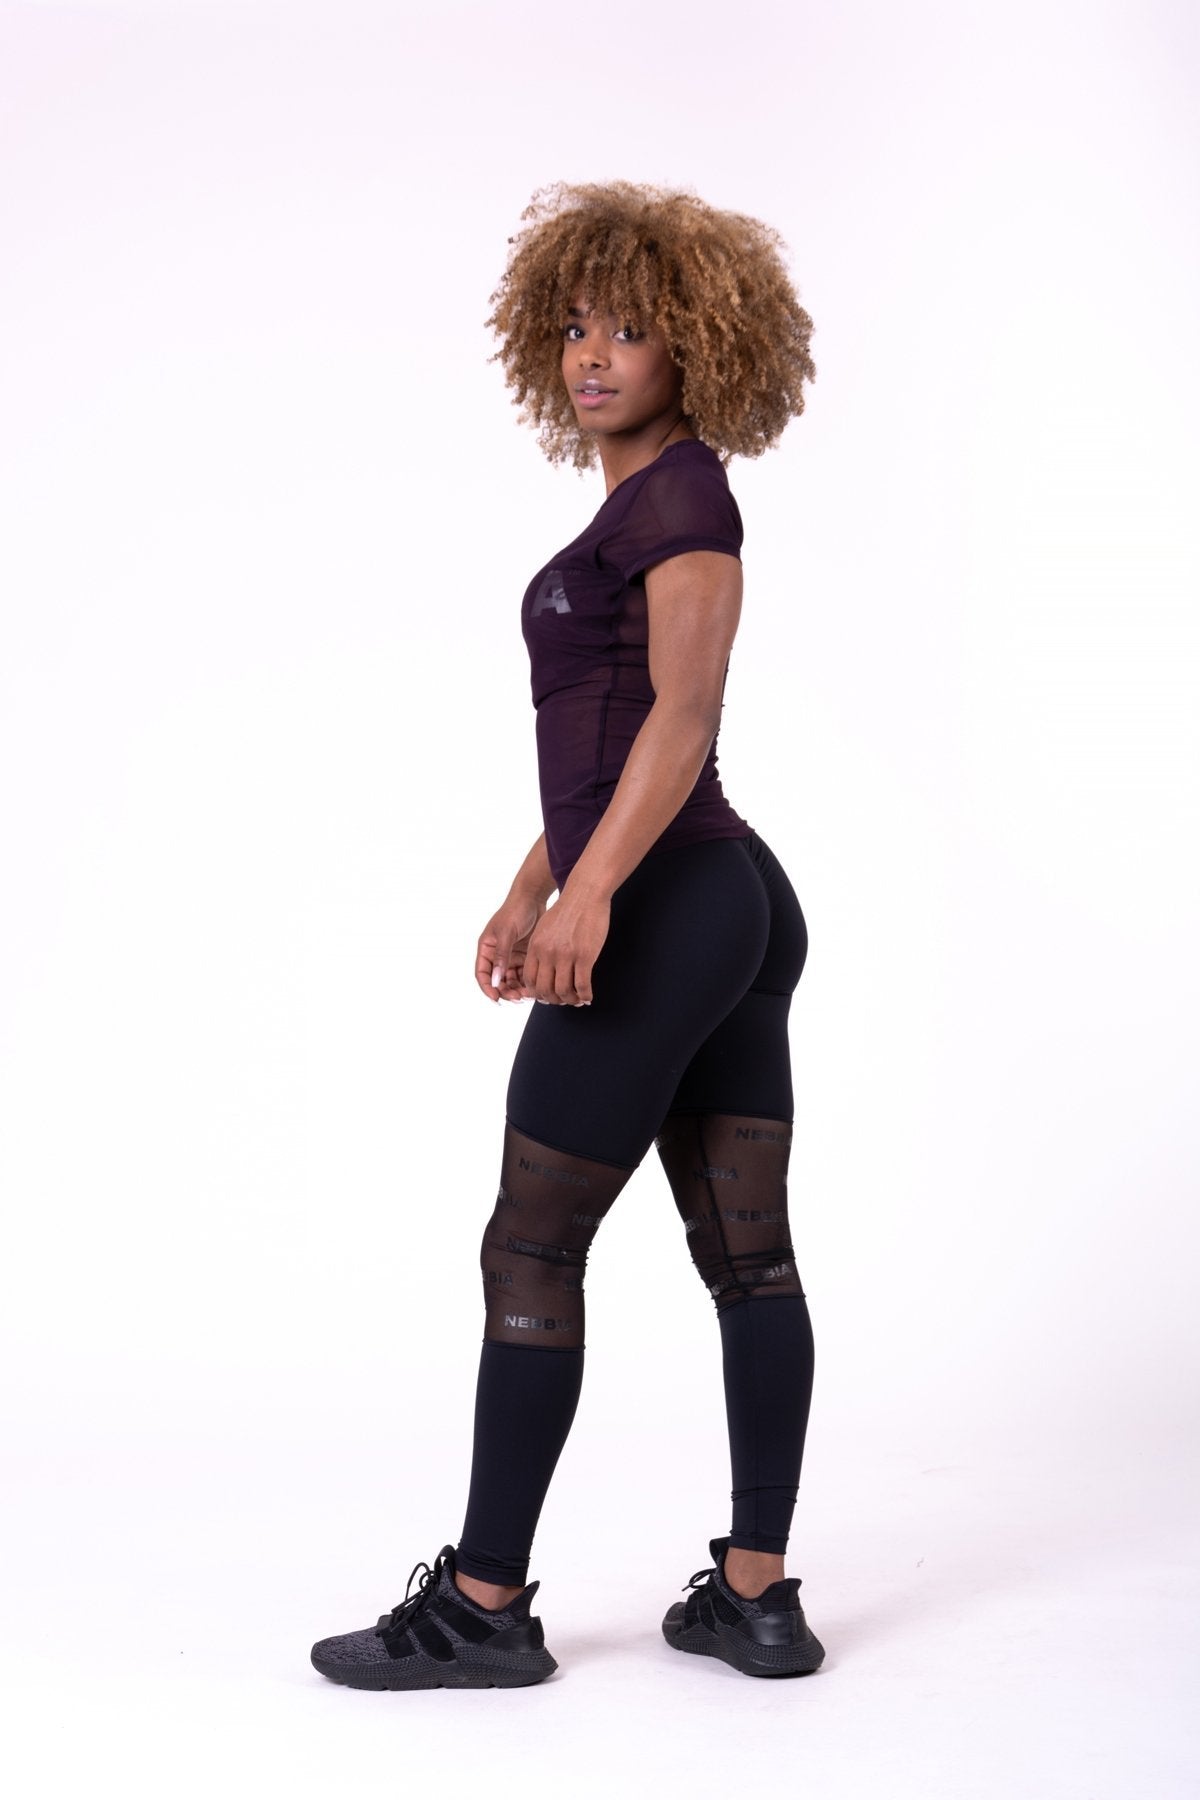 Nebbia Mesh It Up! Leggings 666 - Black - Urban Gym Wear